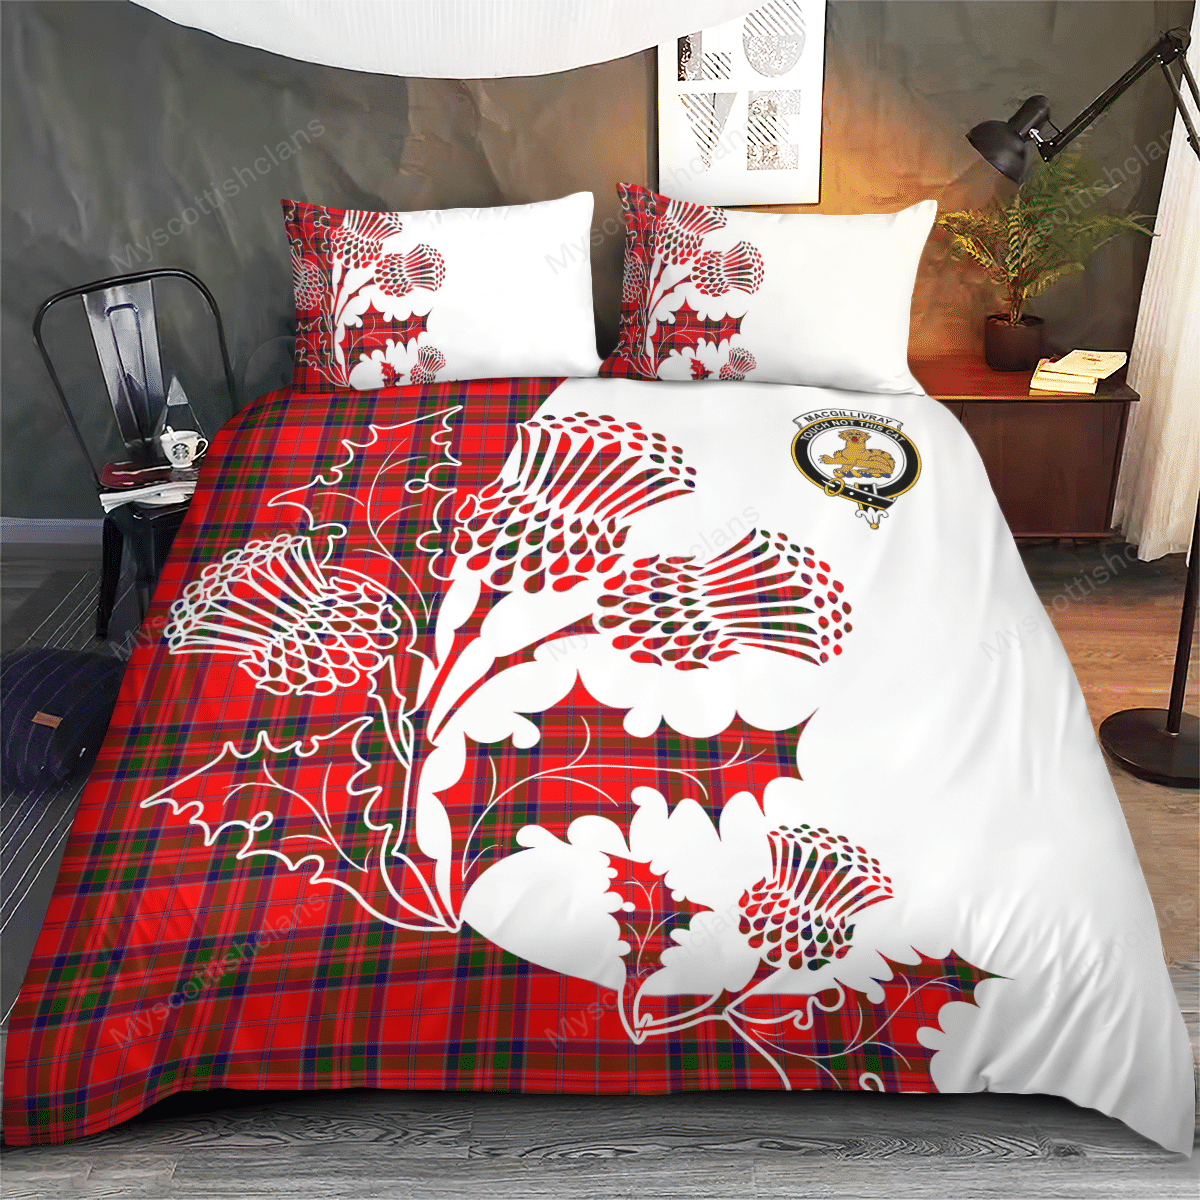 MacGillivray Tartan Crest Bedding Set - Thistle Style